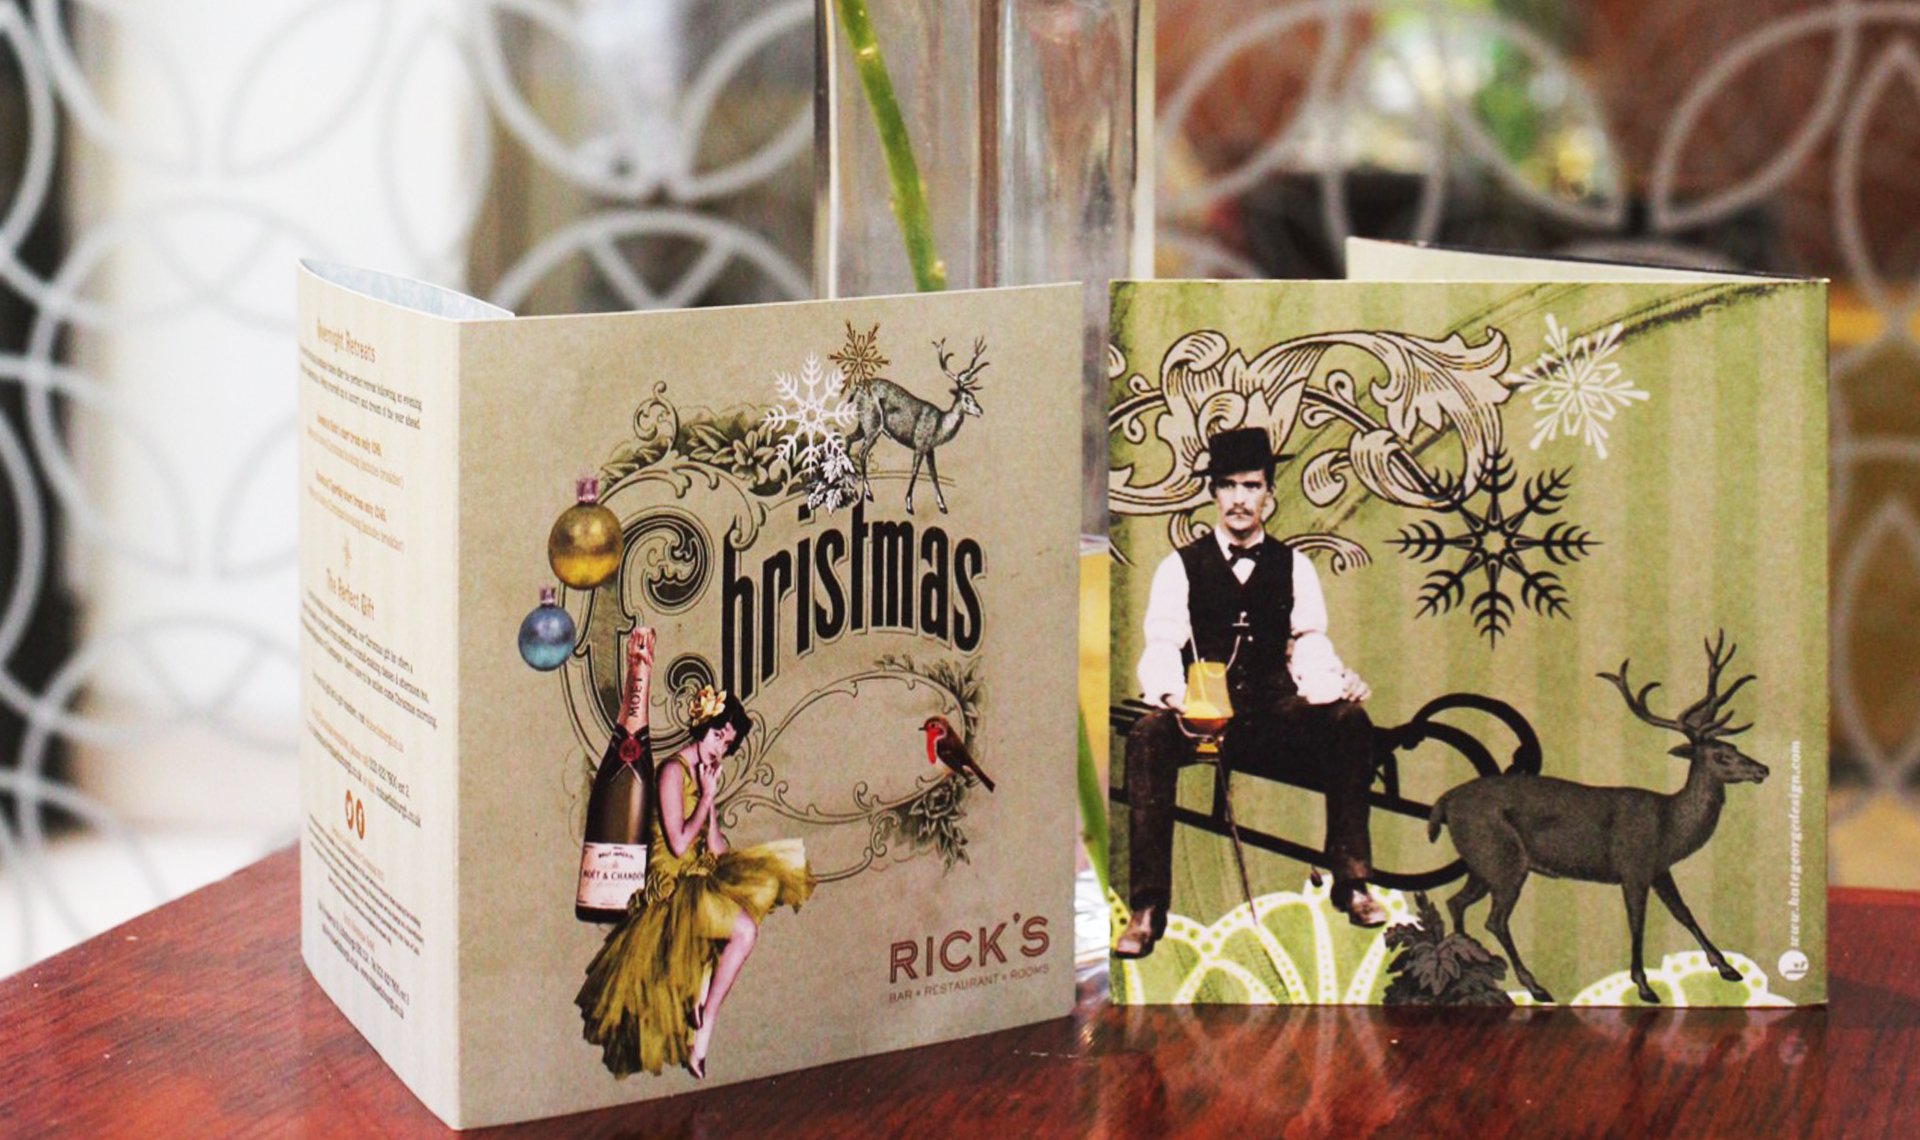 Ricks vintage inspired Christmas drinks menus